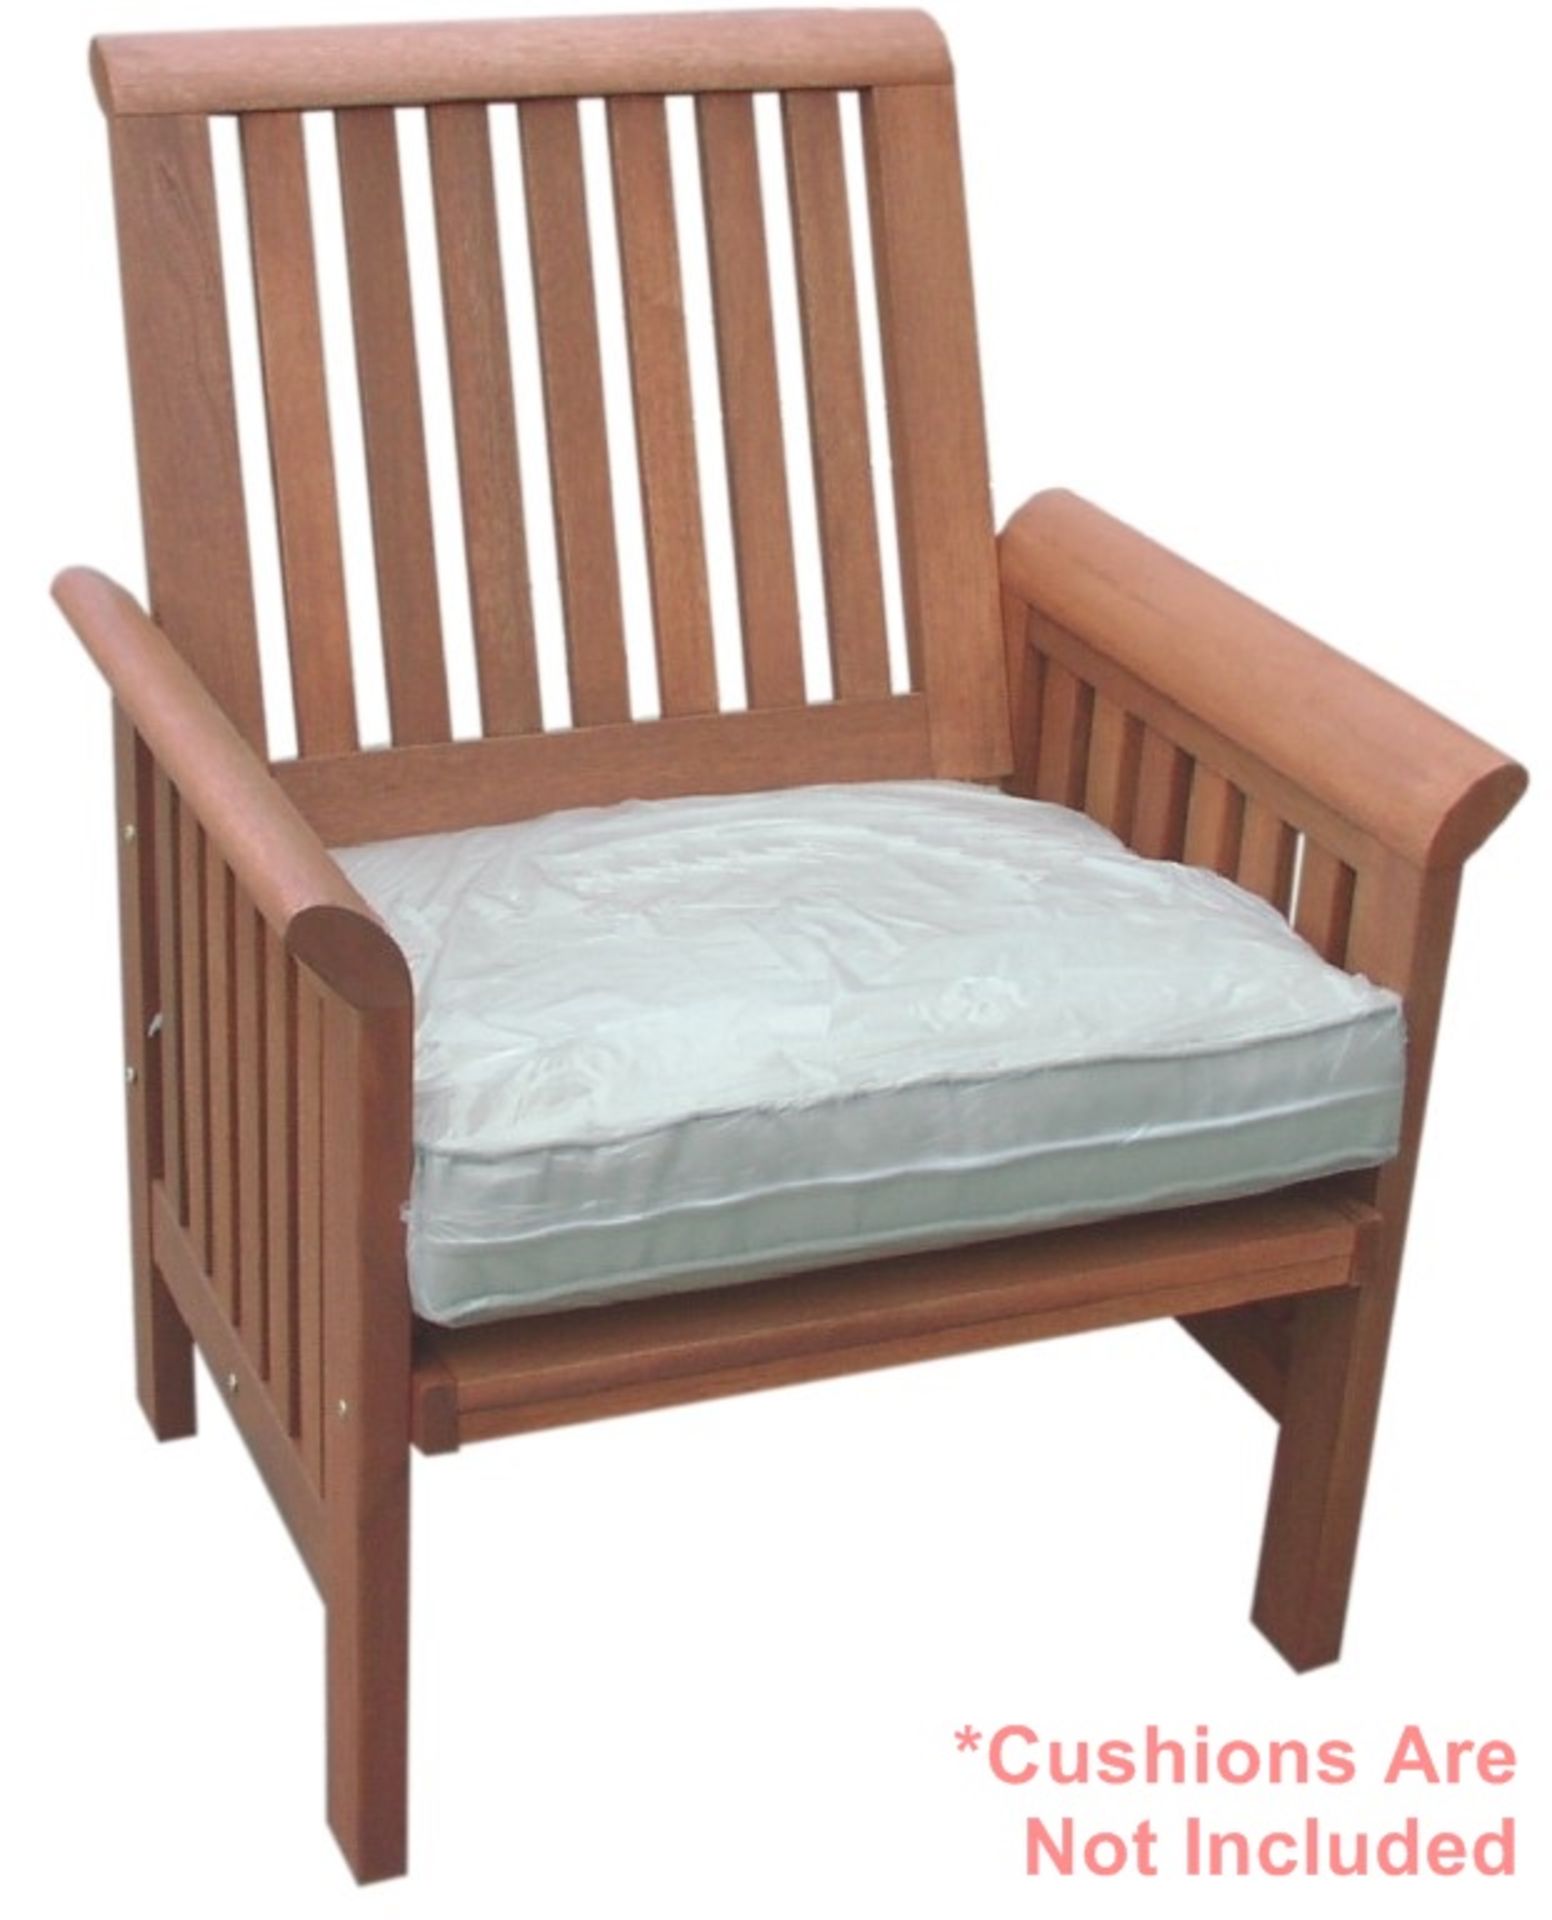 1 x "Jakarta" Garden Armchair - Made From Treated Meranti Hardwood - Rot and Moisture Resistant -